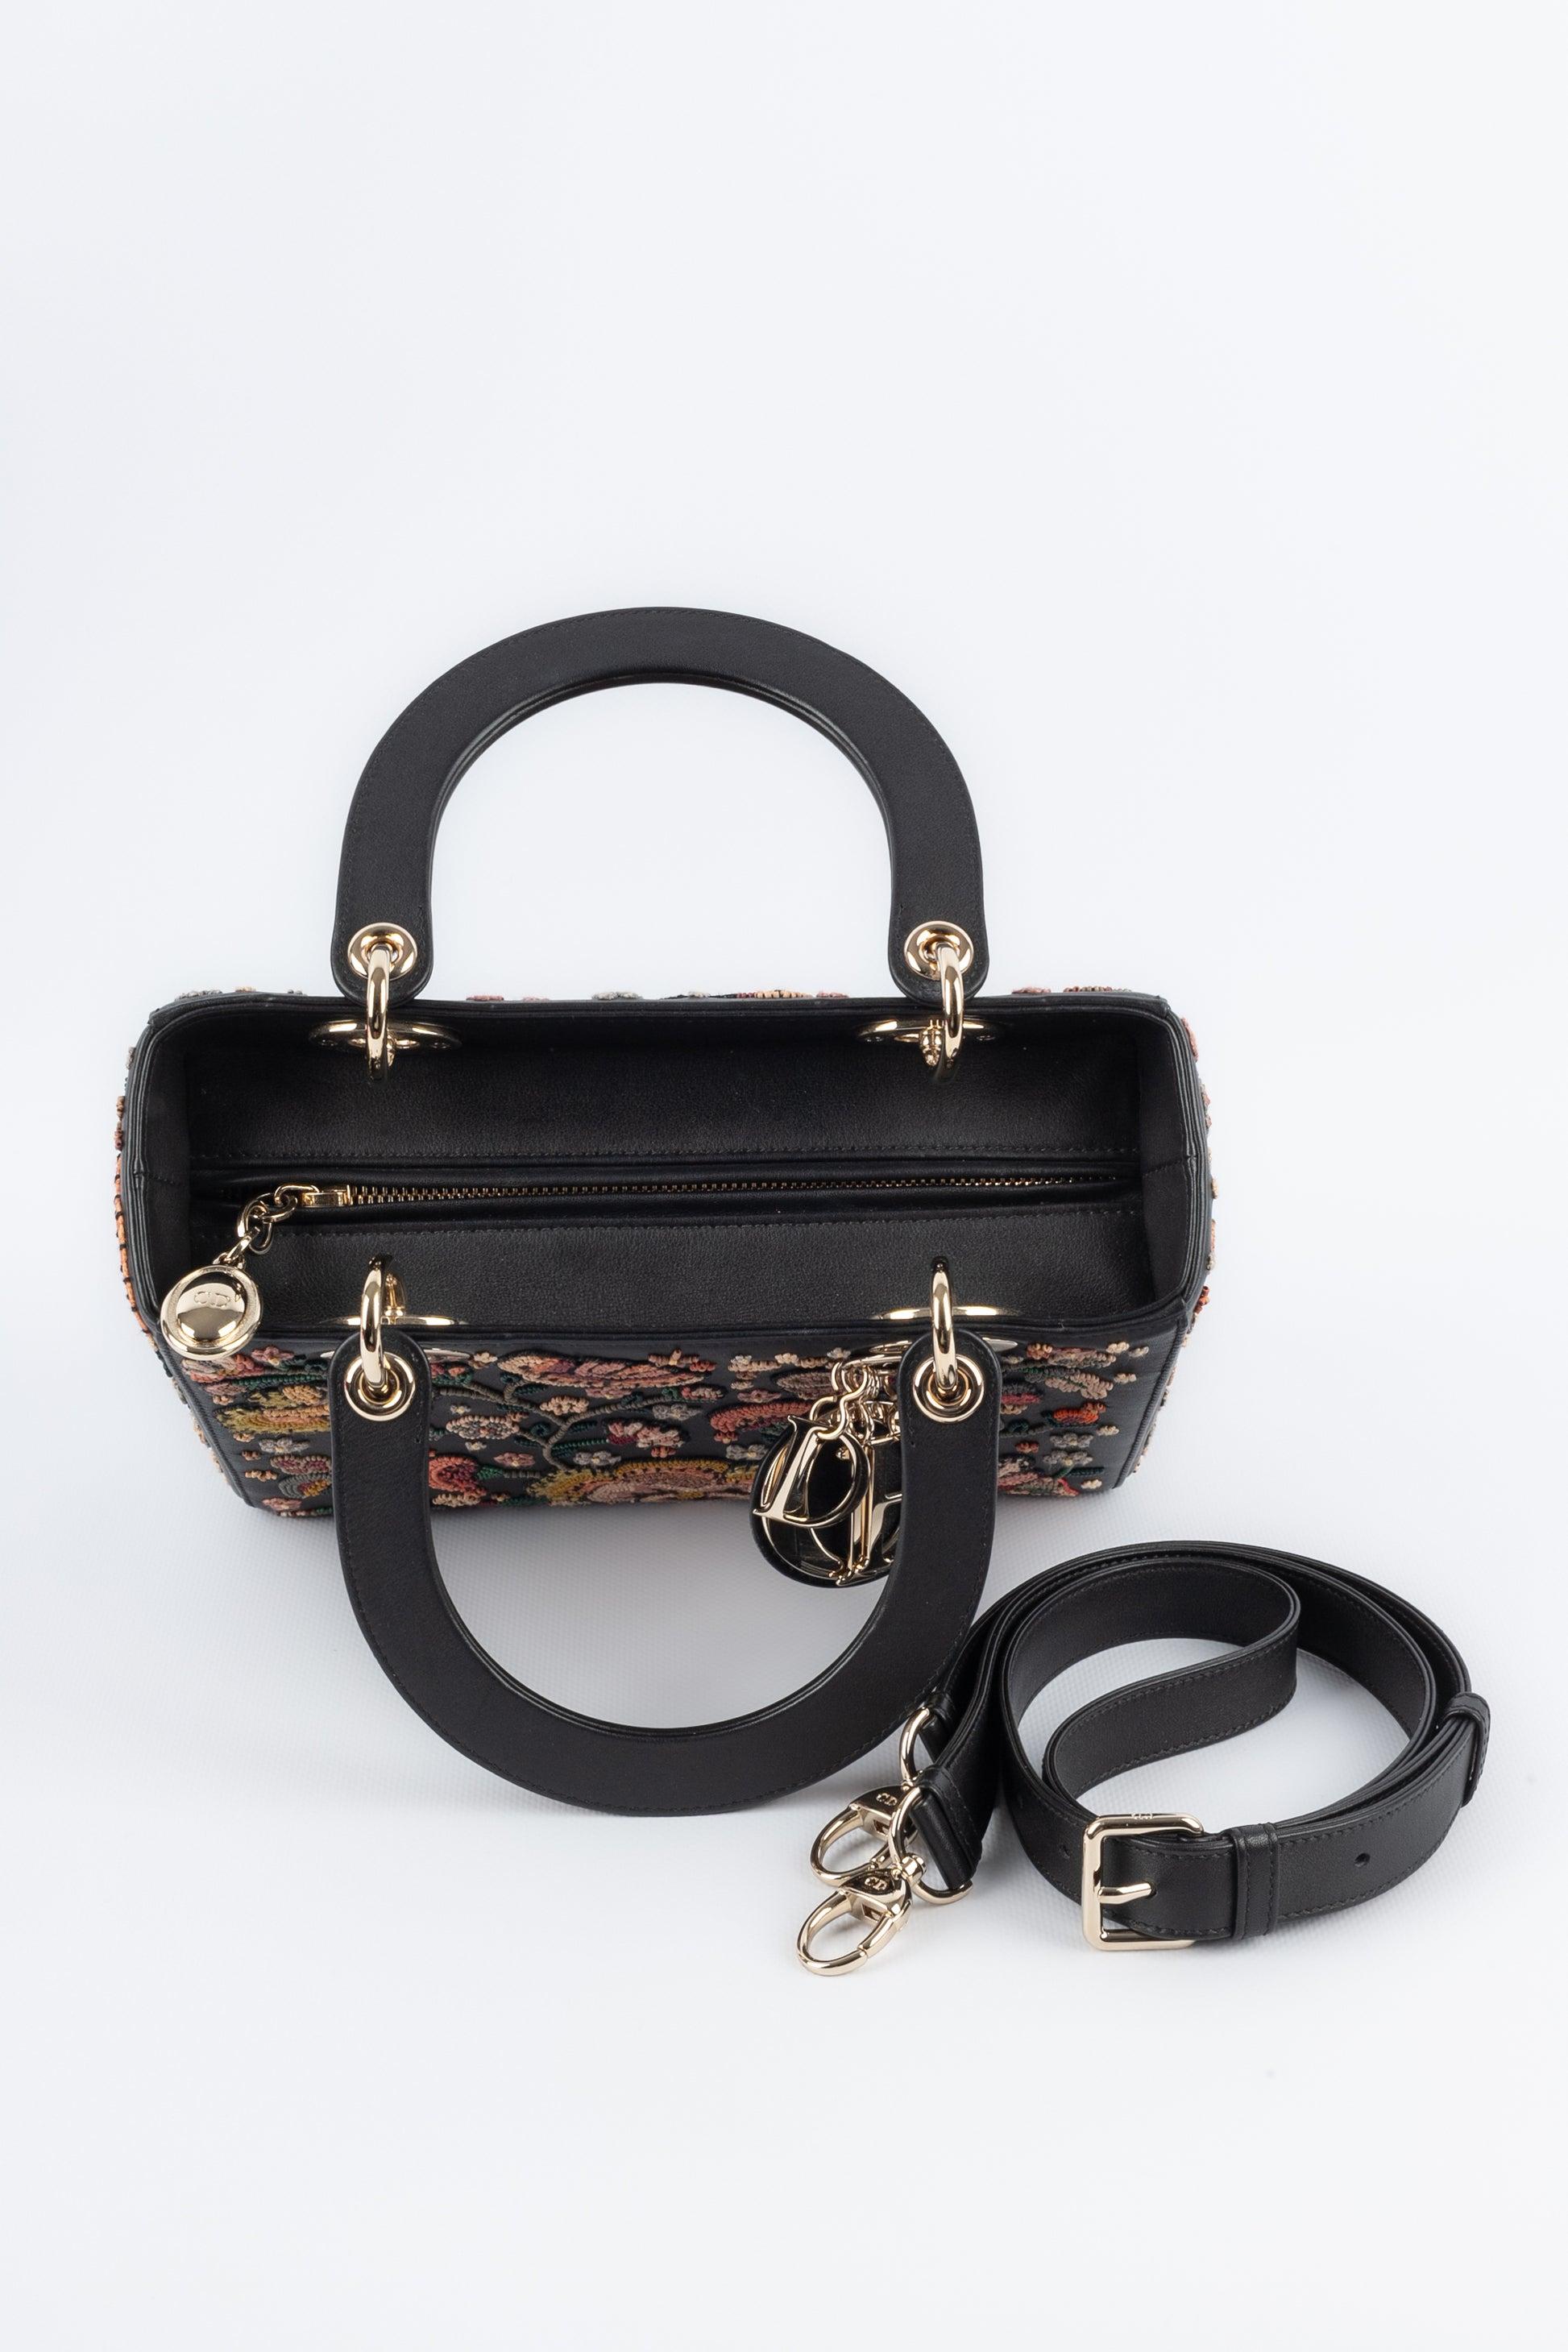 Lady Dior Black Leather Bag, 2019 For Sale 3